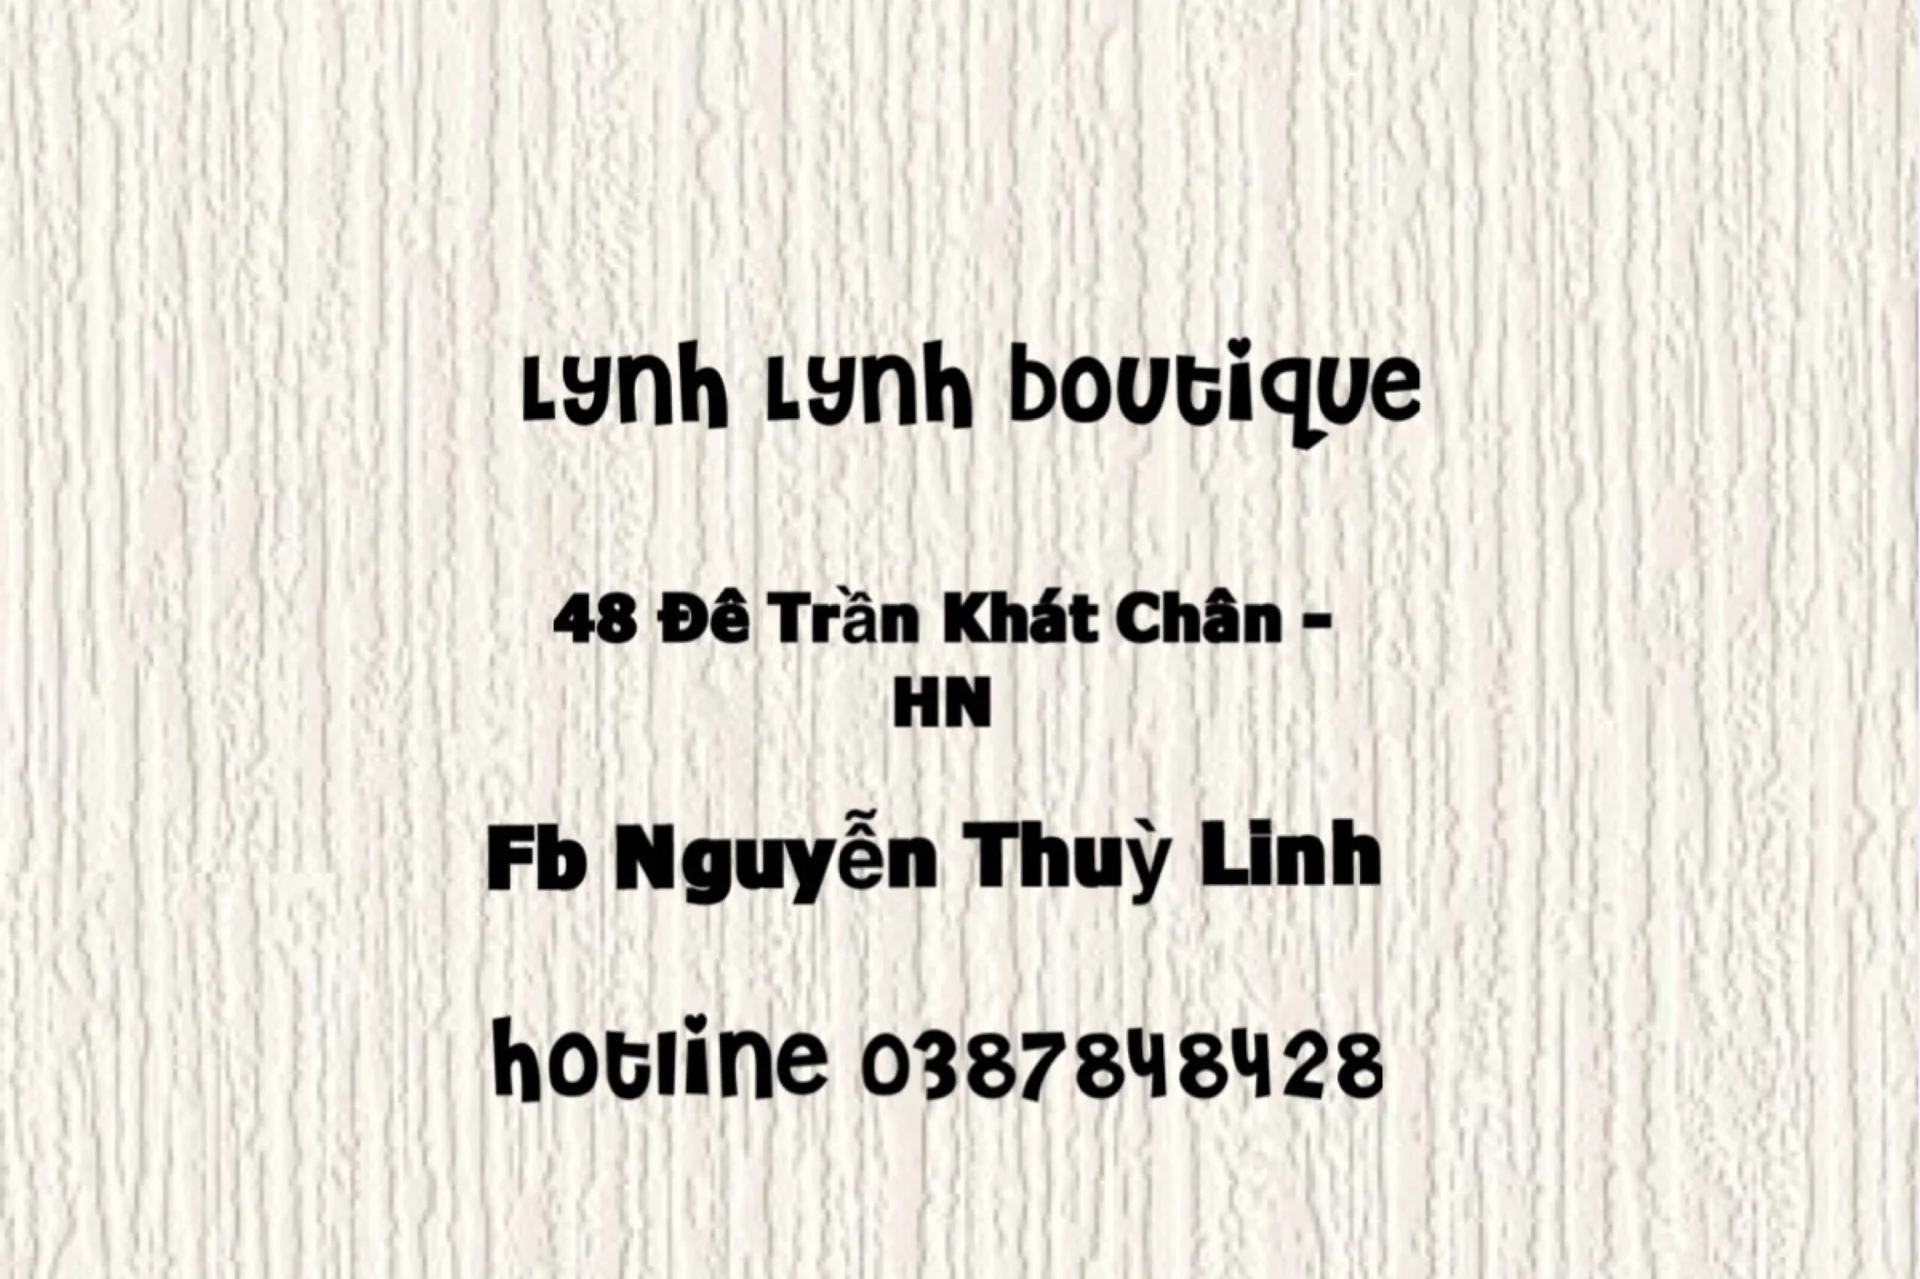 Nguyễn Thuỳ Linh's cover photo